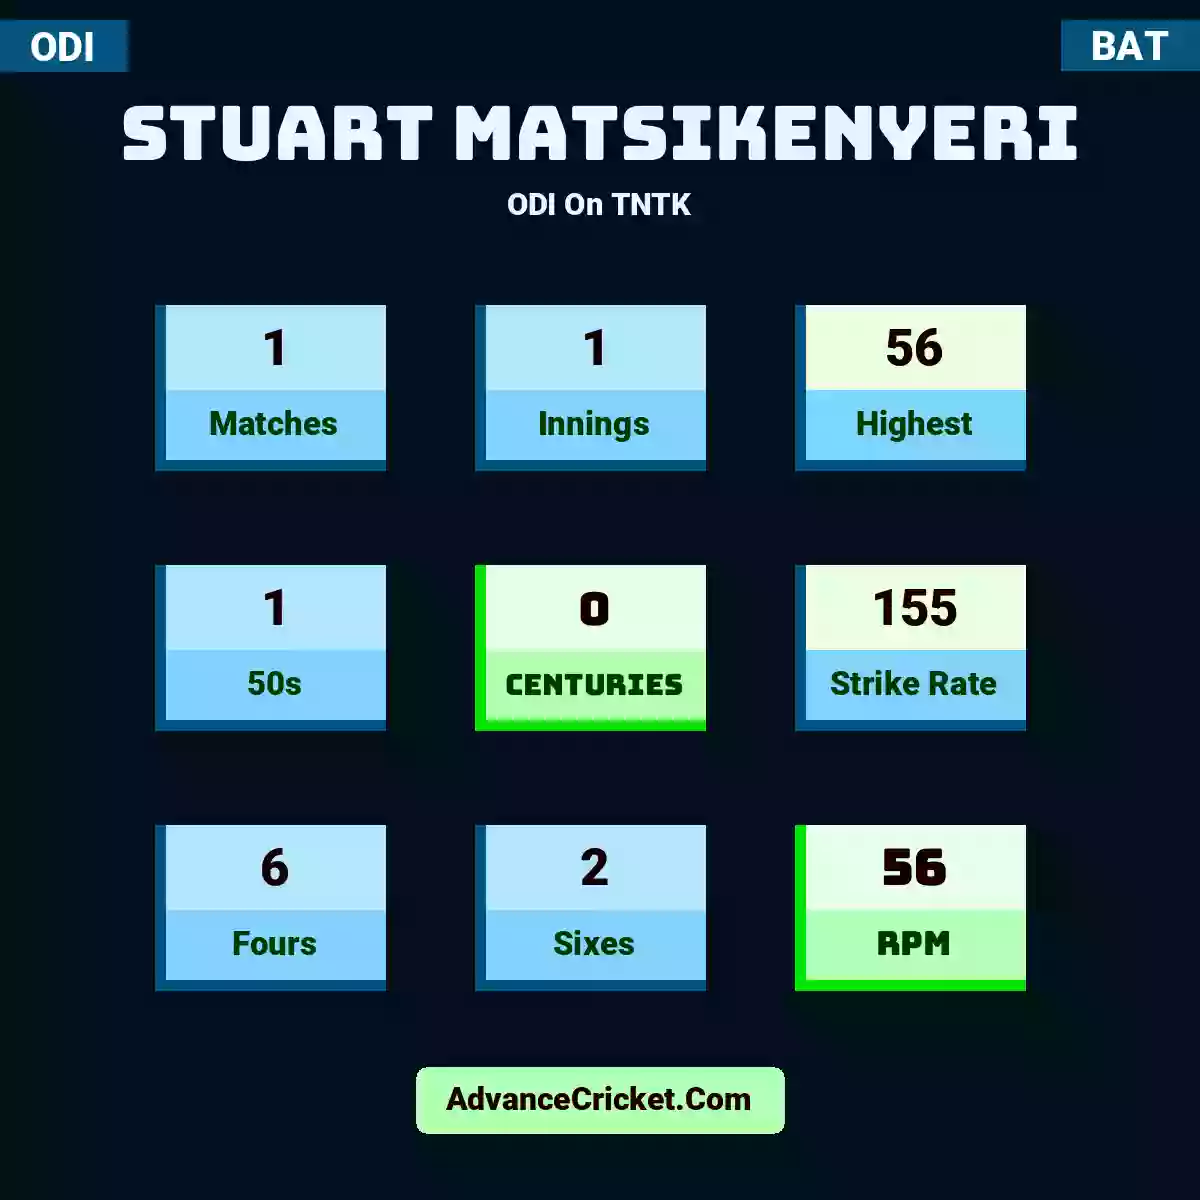 Stuart Matsikenyeri ODI  On TNTK, Stuart Matsikenyeri played 1 matches, scored 56 runs as highest, 1 half-centuries, and 0 centuries, with a strike rate of 155. S.Matsikenyeri hit 6 fours and 2 sixes, with an RPM of 56.